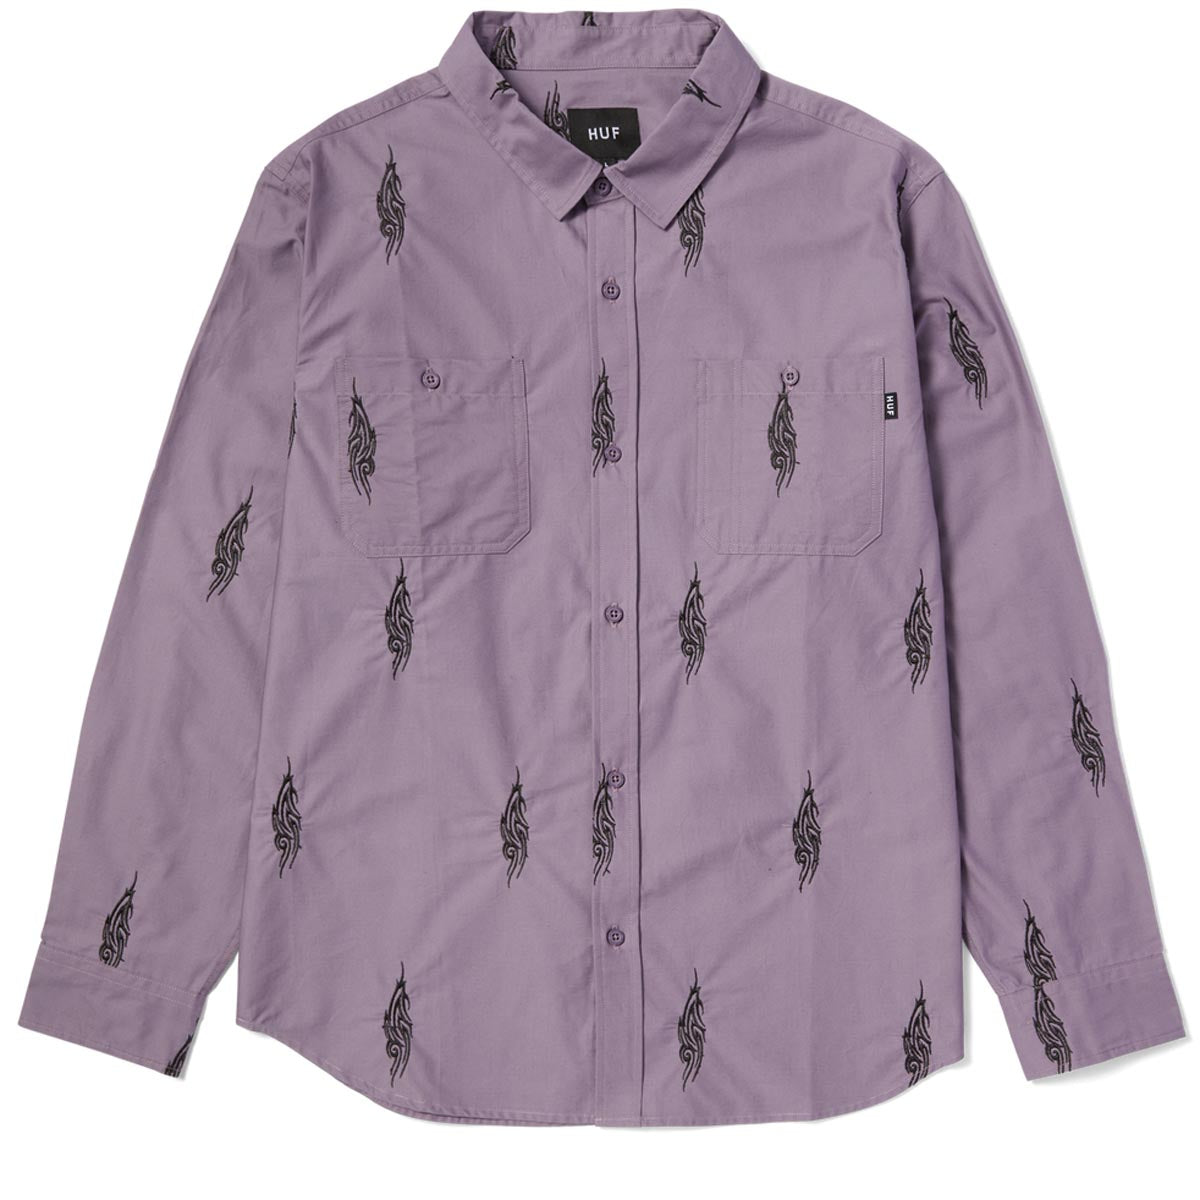 HUF Larkin Embroidered Long Sleeve Work Shirt - Dust Purple image 1